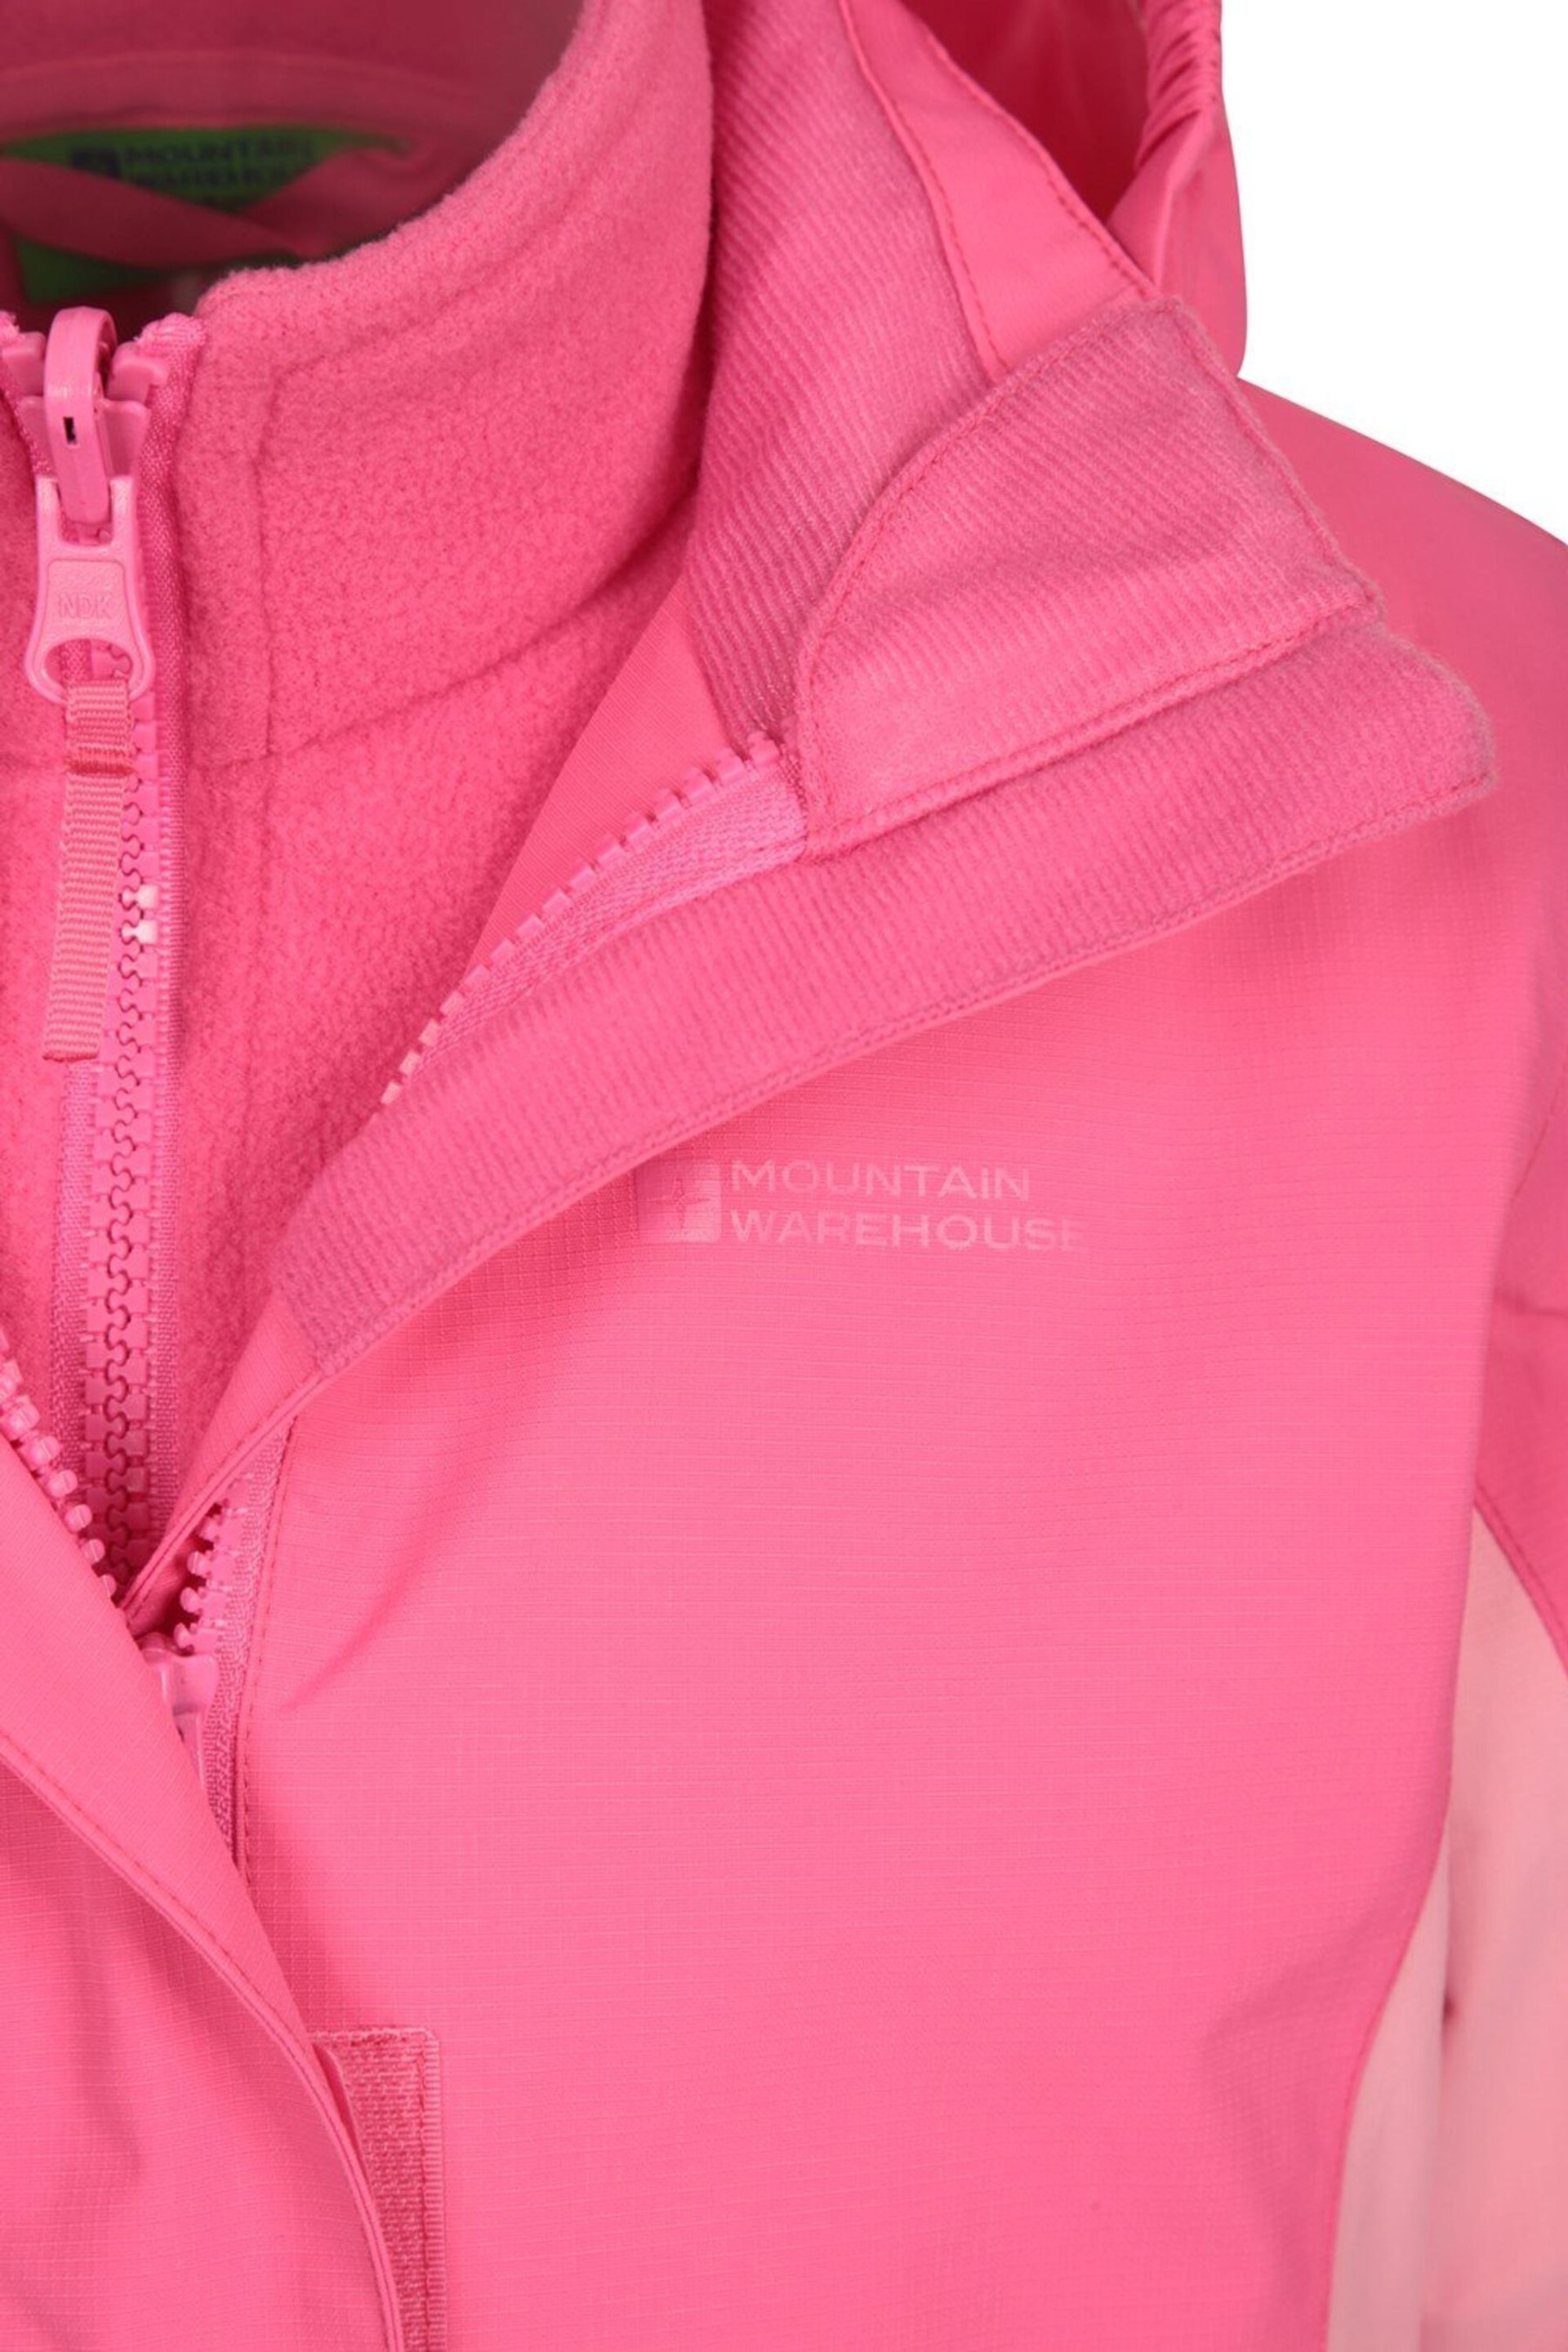 Mountain Warehouse Pink Lightning 3 in 1 Waterproof Jacket - Image 4 of 4